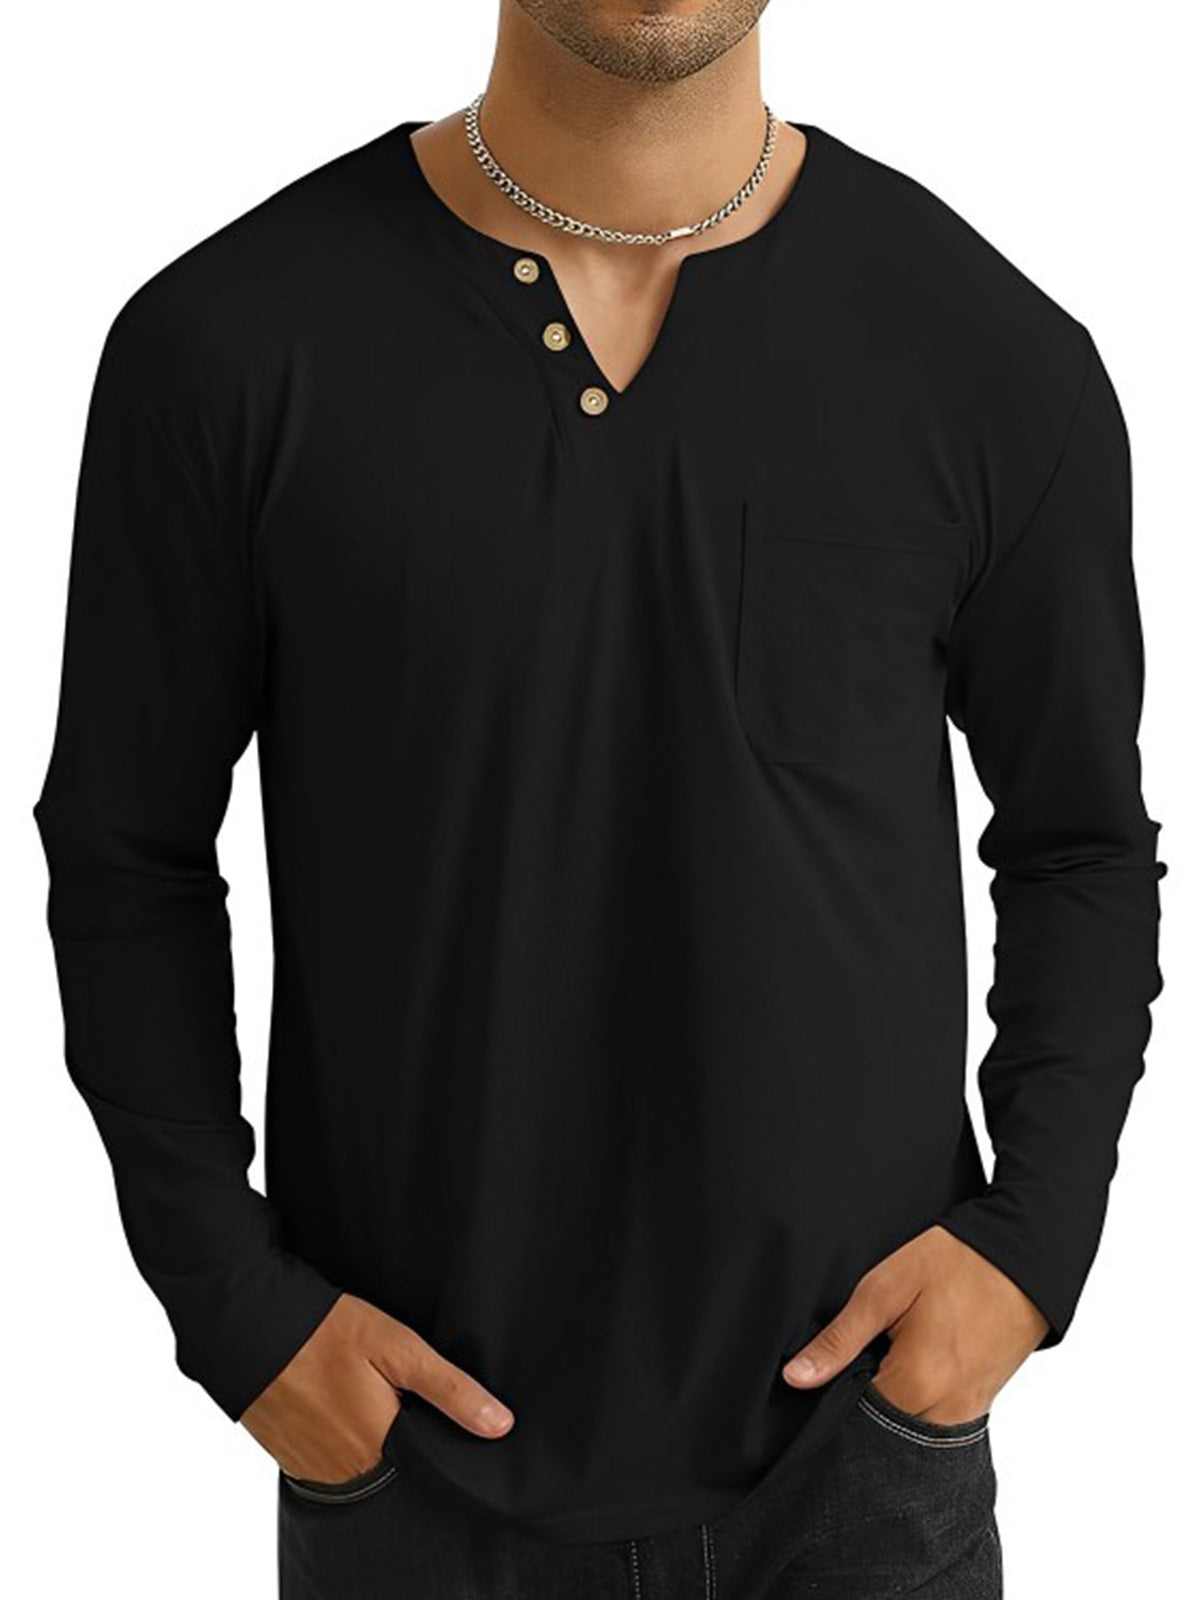 Men's v-neck button pocket long sleeve t-shirt top